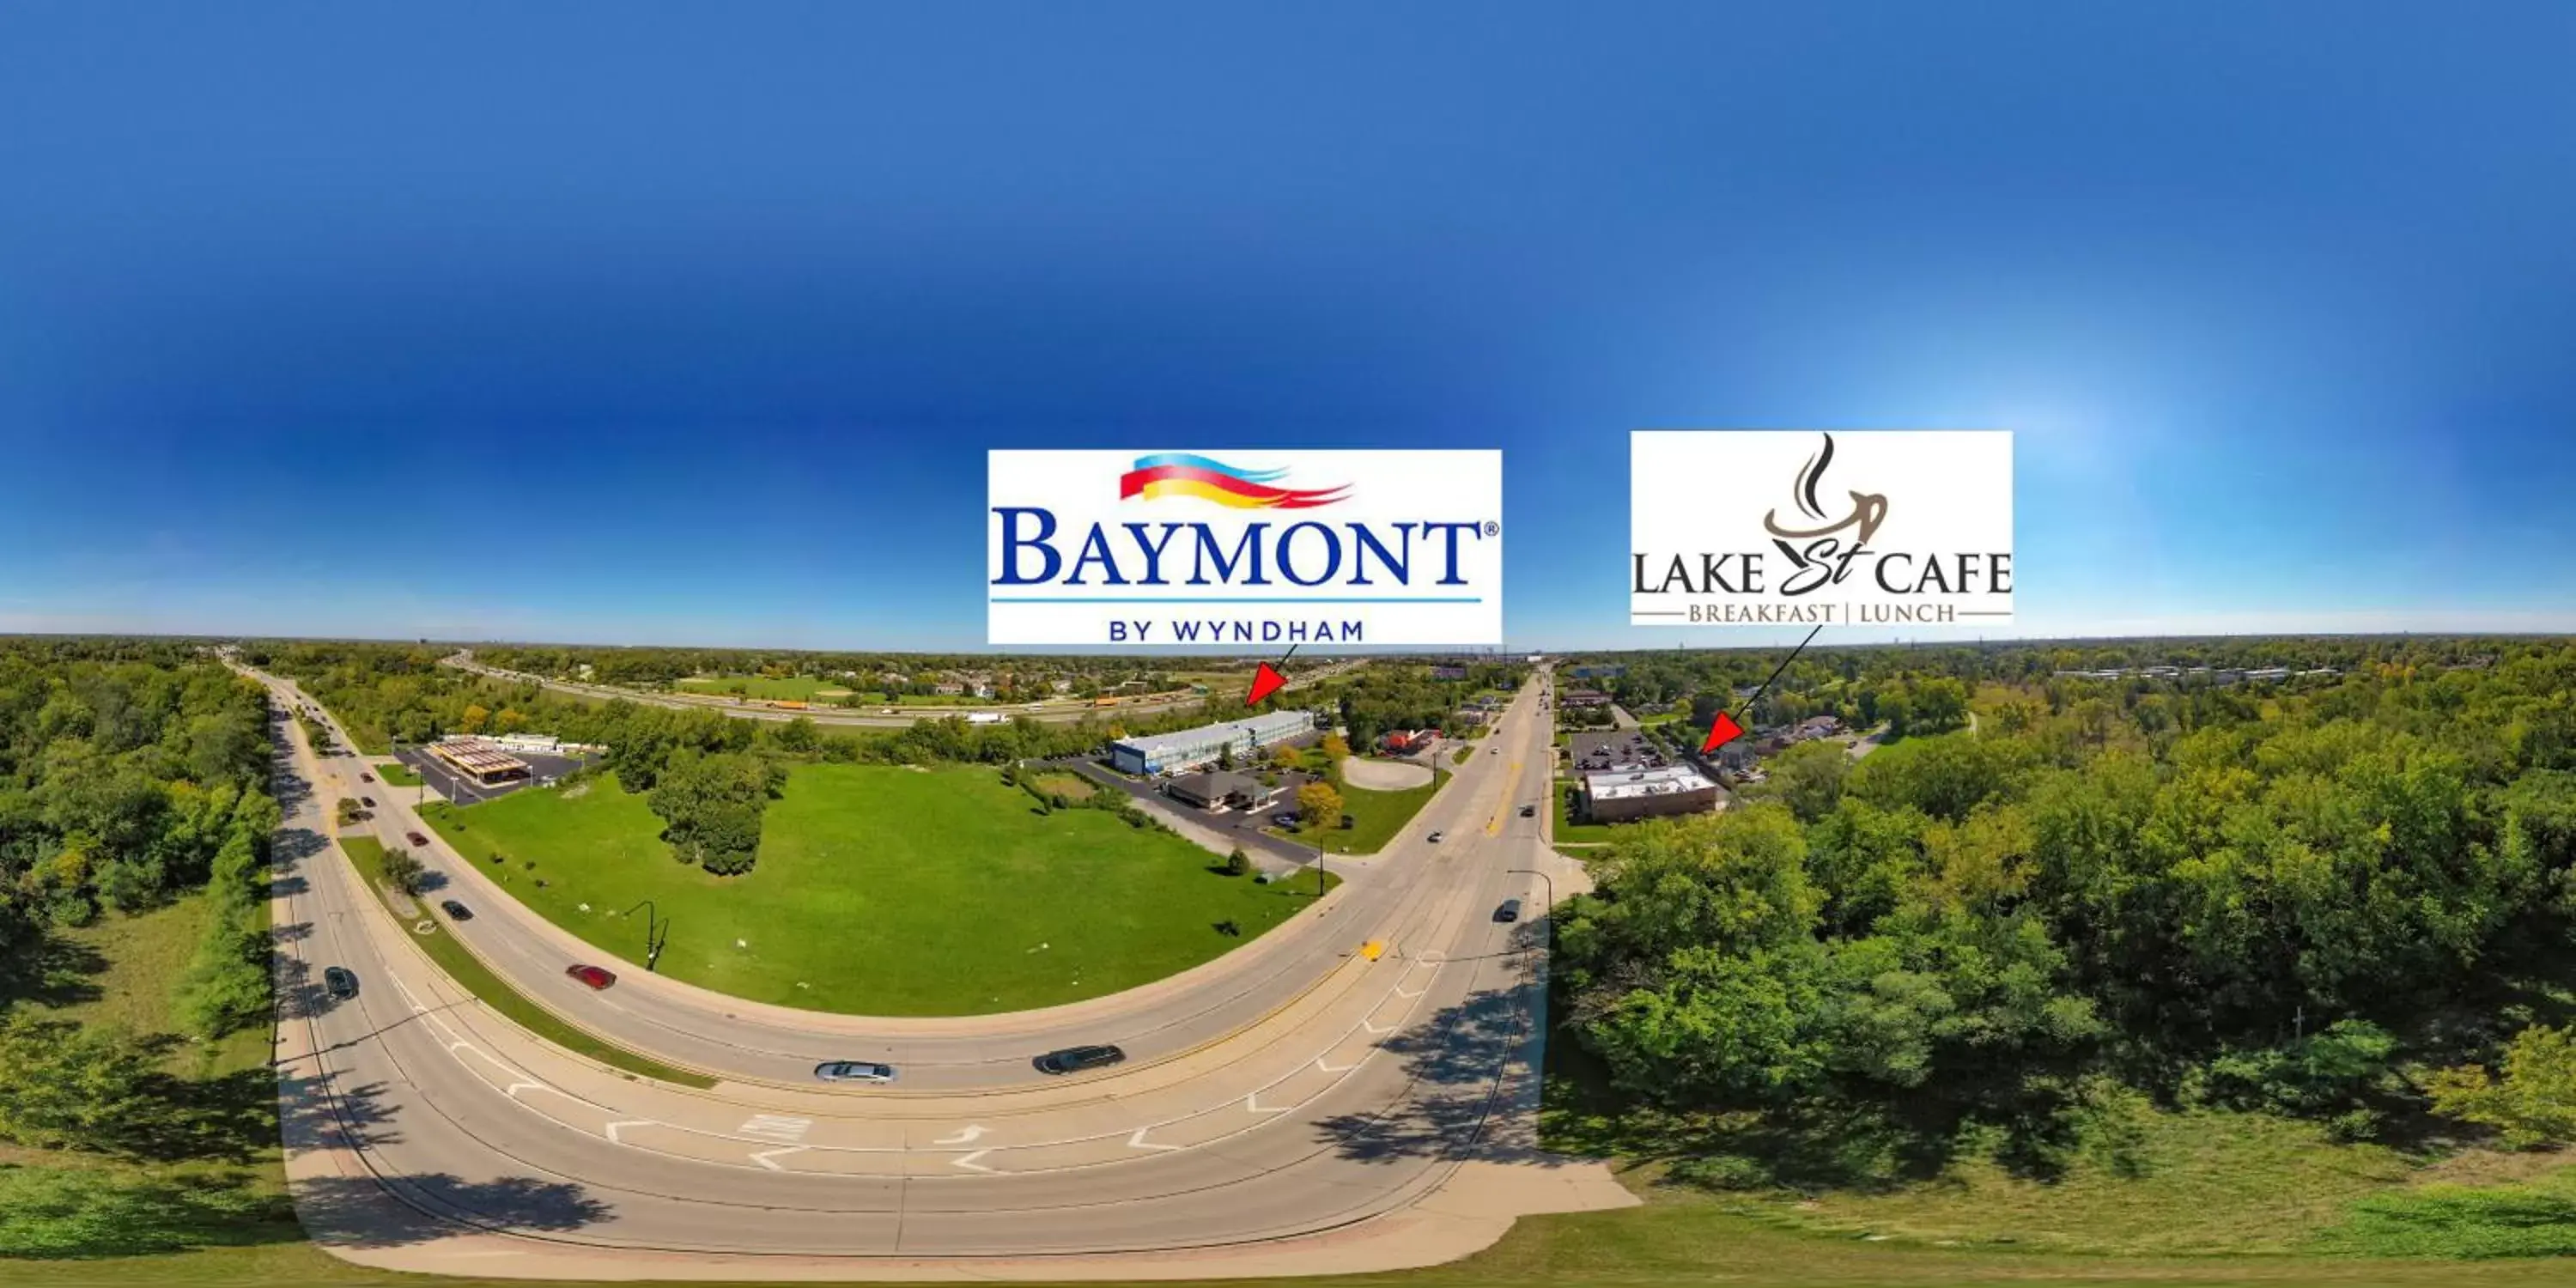 Baymont by Wyndham - Chicago - Addison - O'Hare